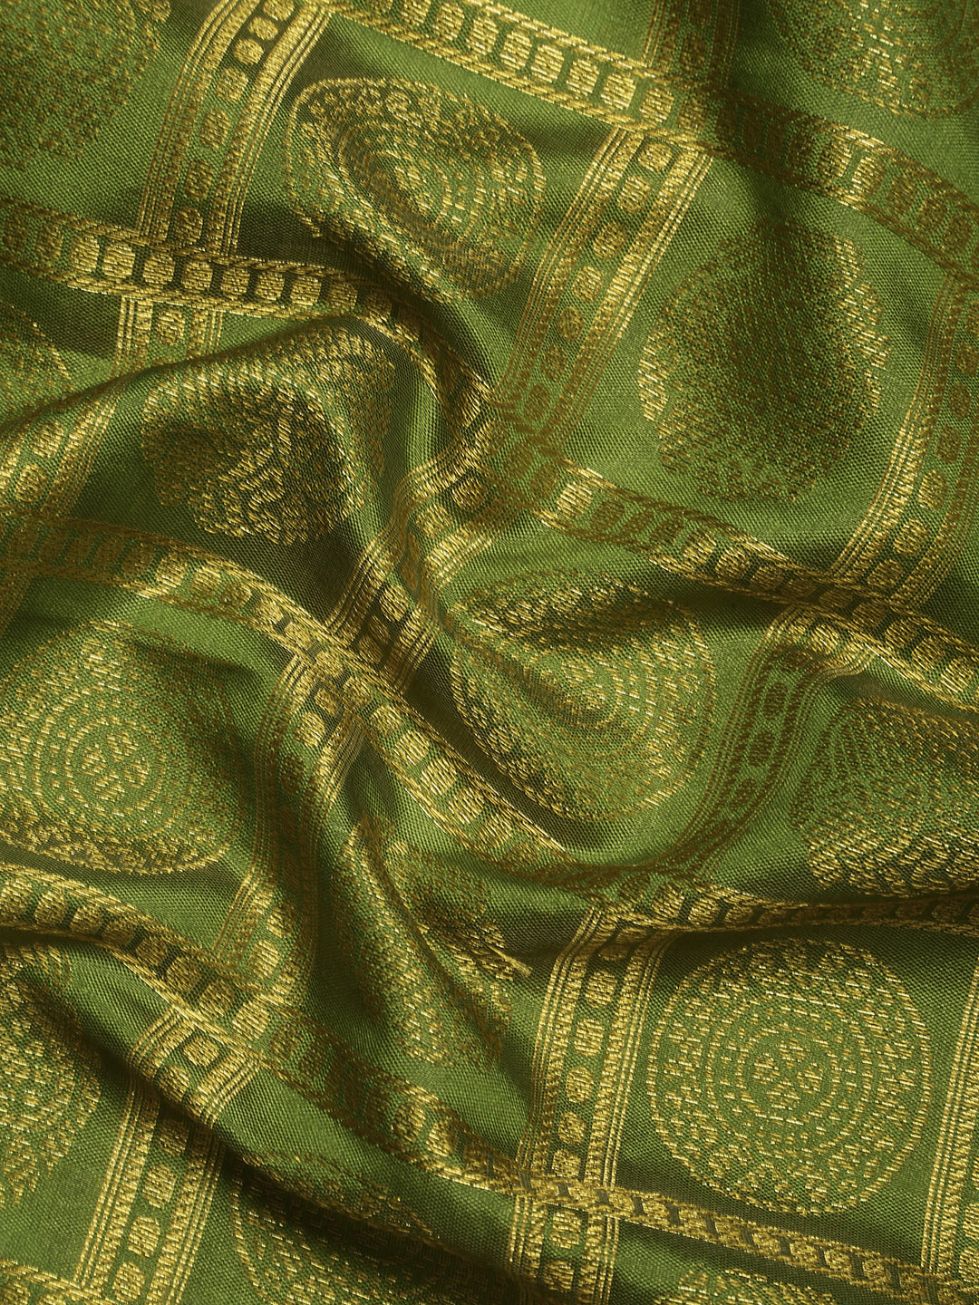 Pista Green Color Ethnic Motifs Zari Pure Silk Kanchipuram Saree